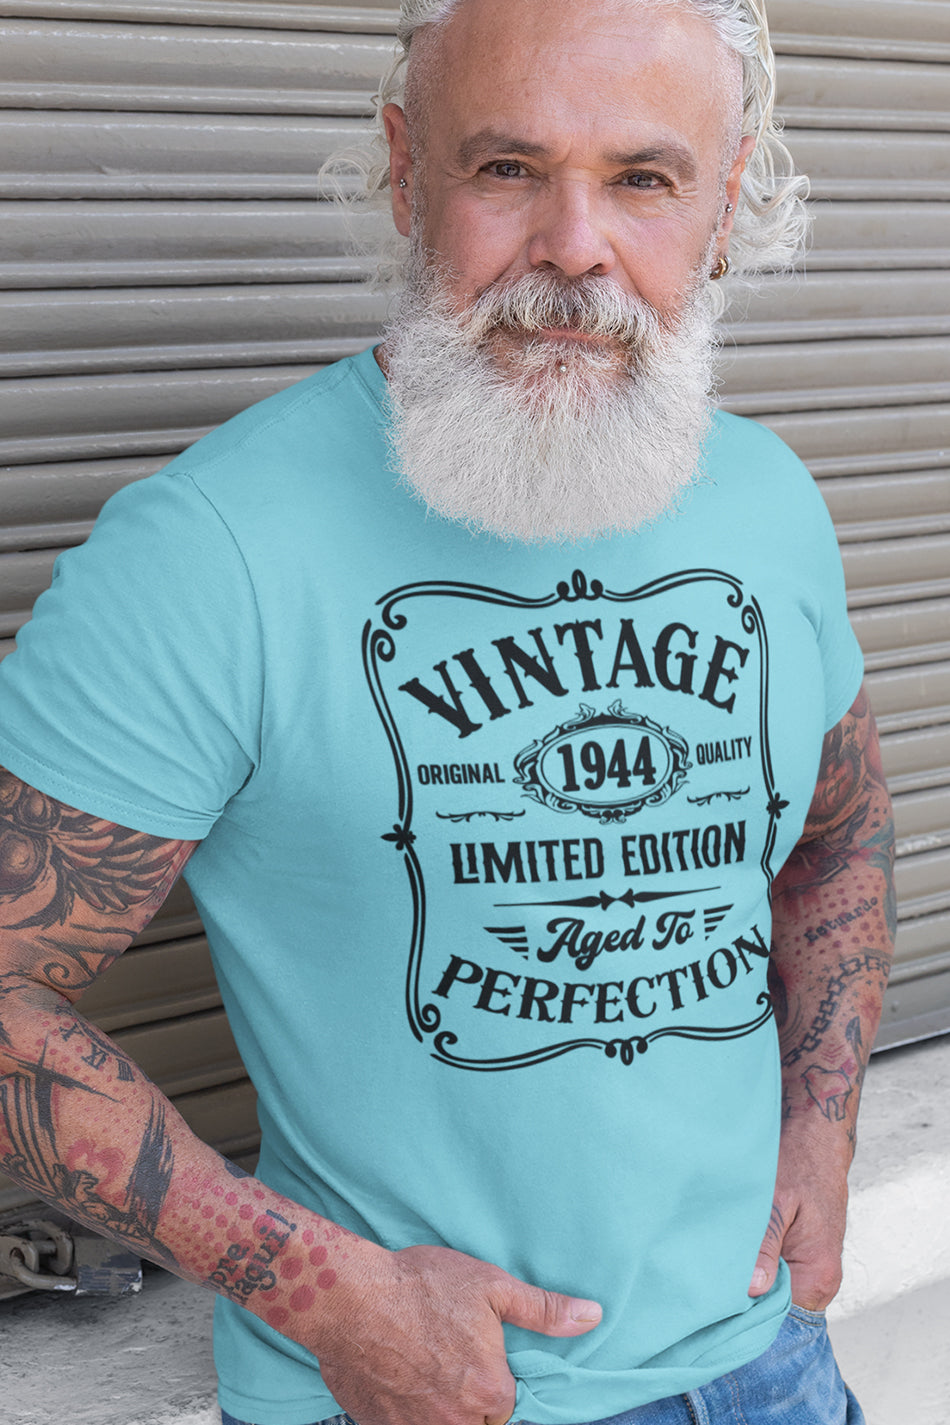 Vintage 1944 Limited Edition 80th Birthday Shirt